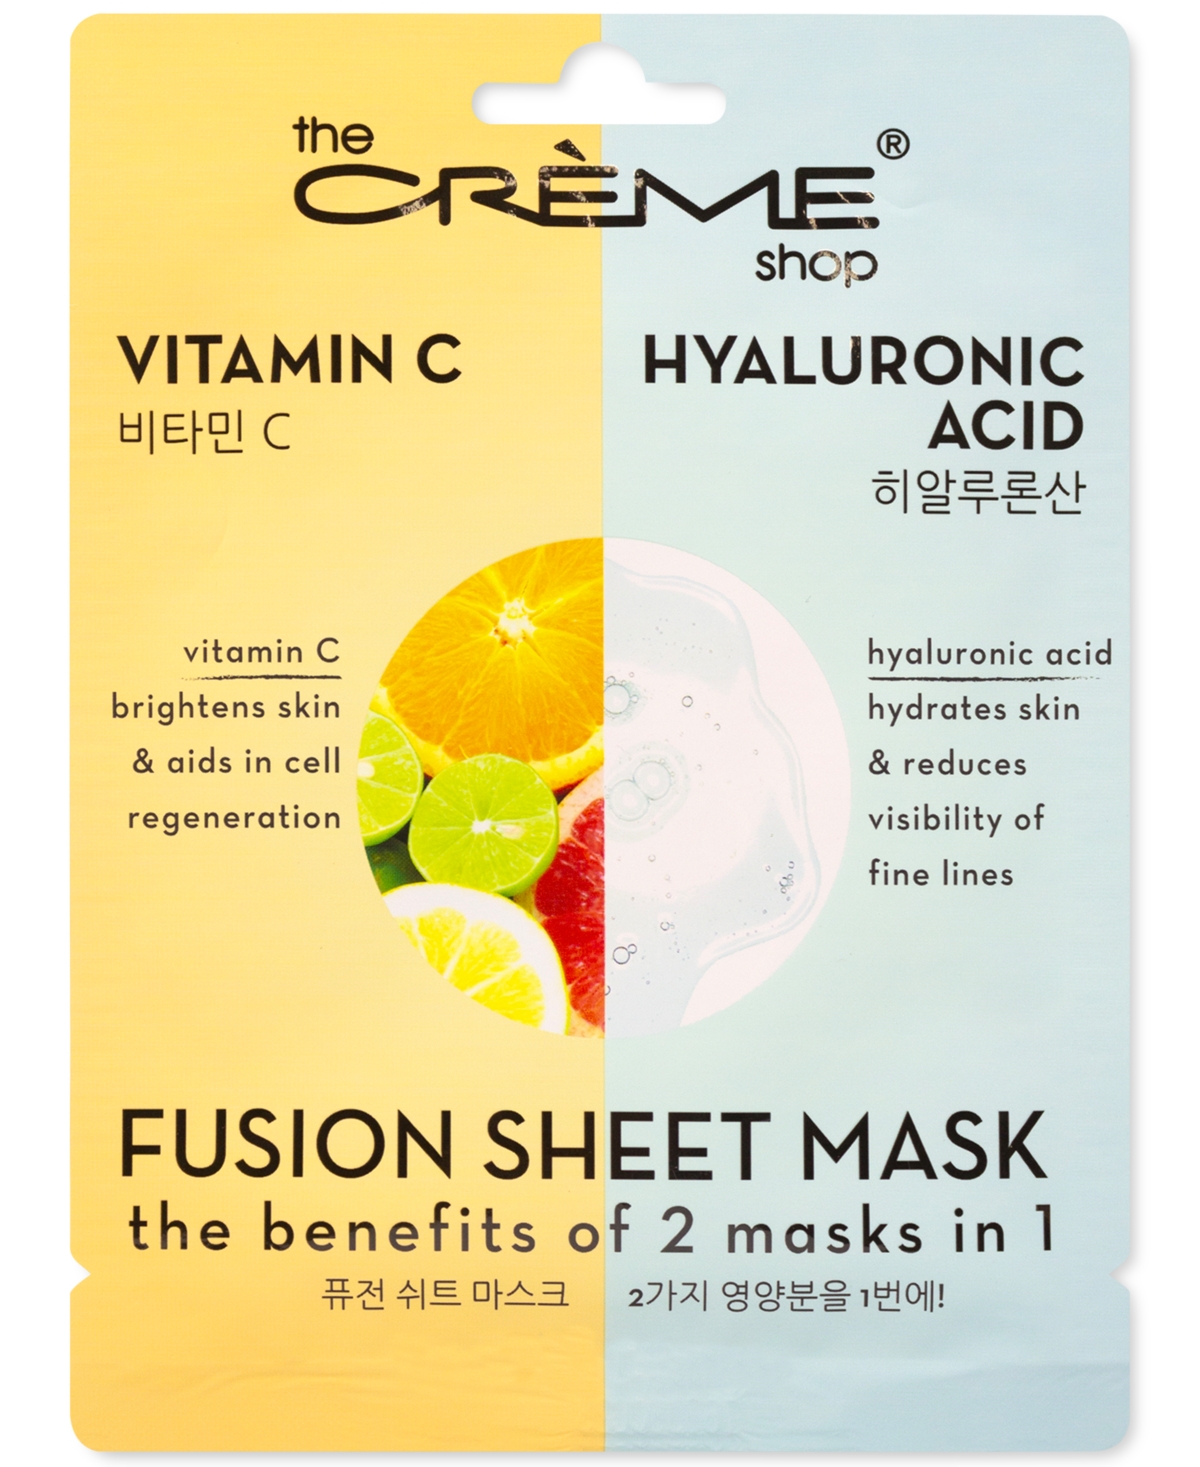 Vitamin C & Hyaluronic Acid Fusion Sheet Mask